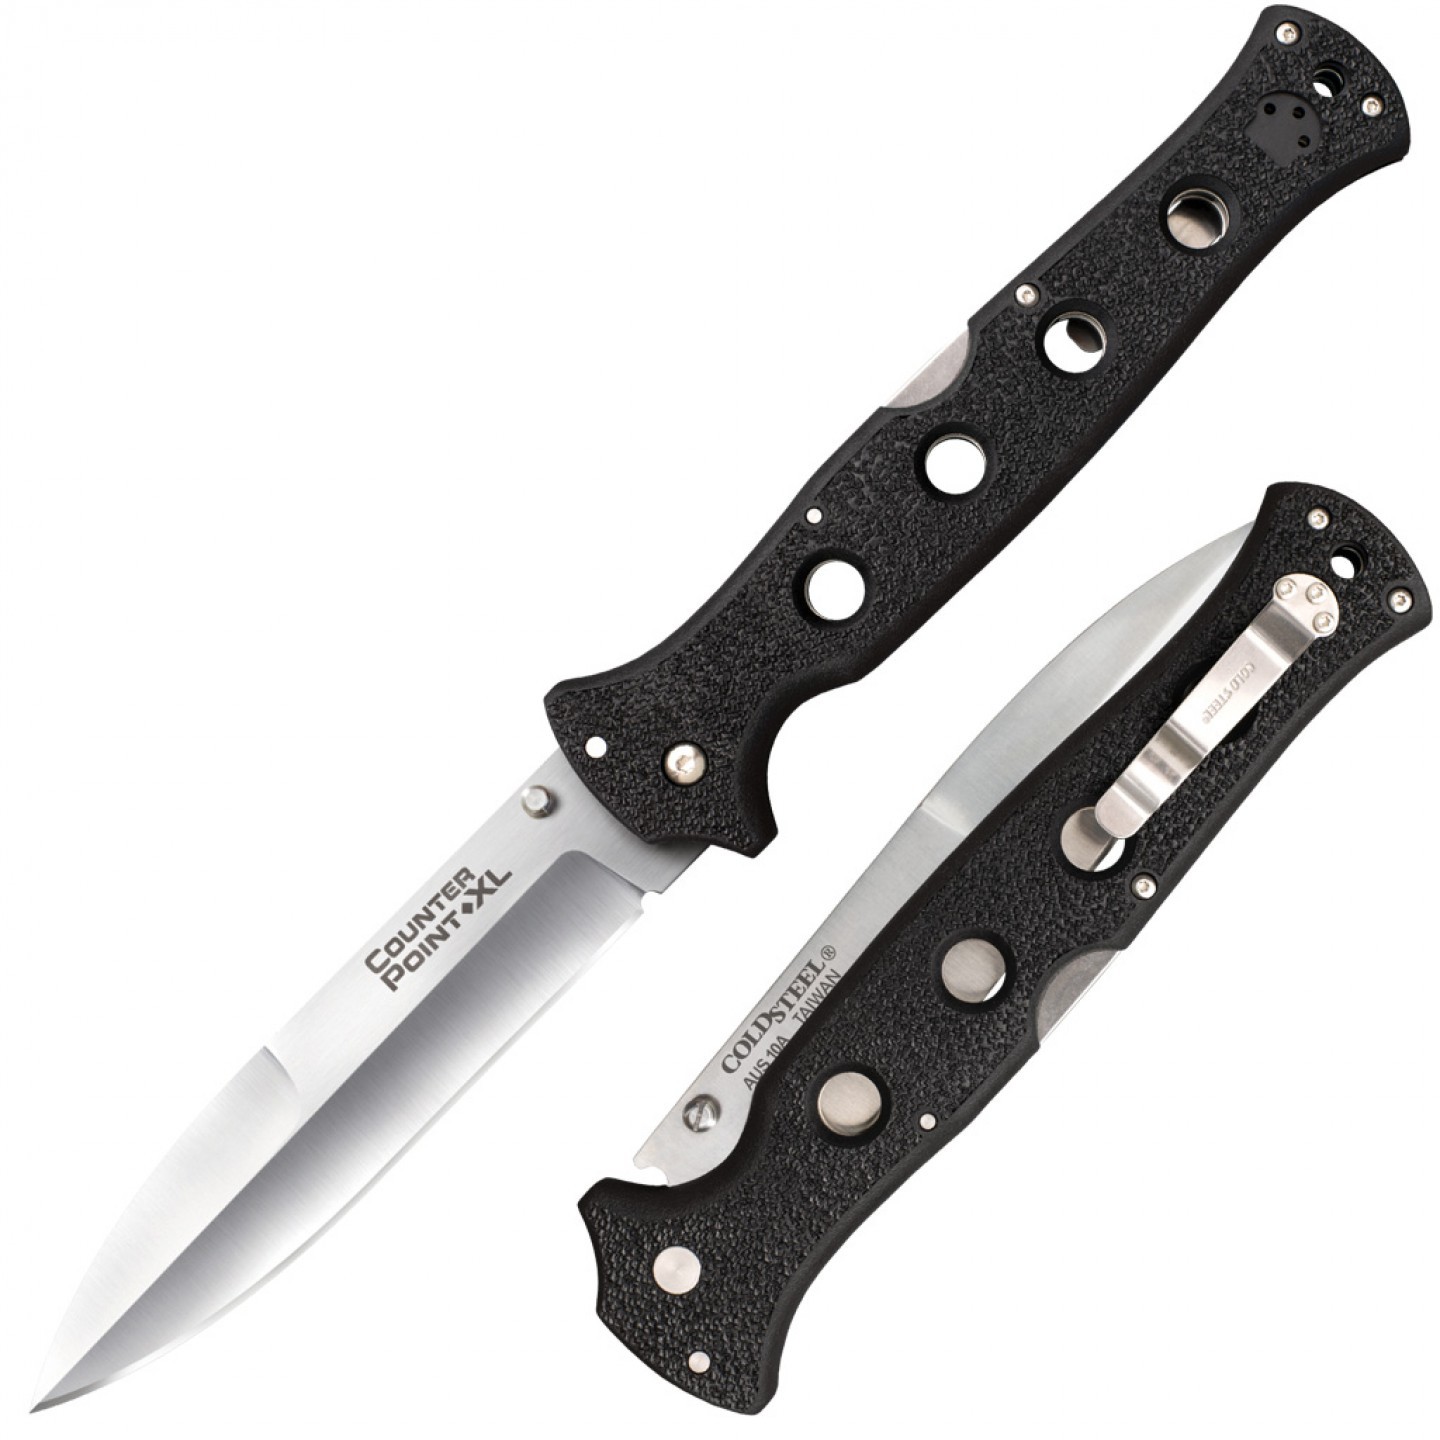 Нож складной Cold Steel Counter Point XL, сталь AUS-10A, рукоять grivory, black